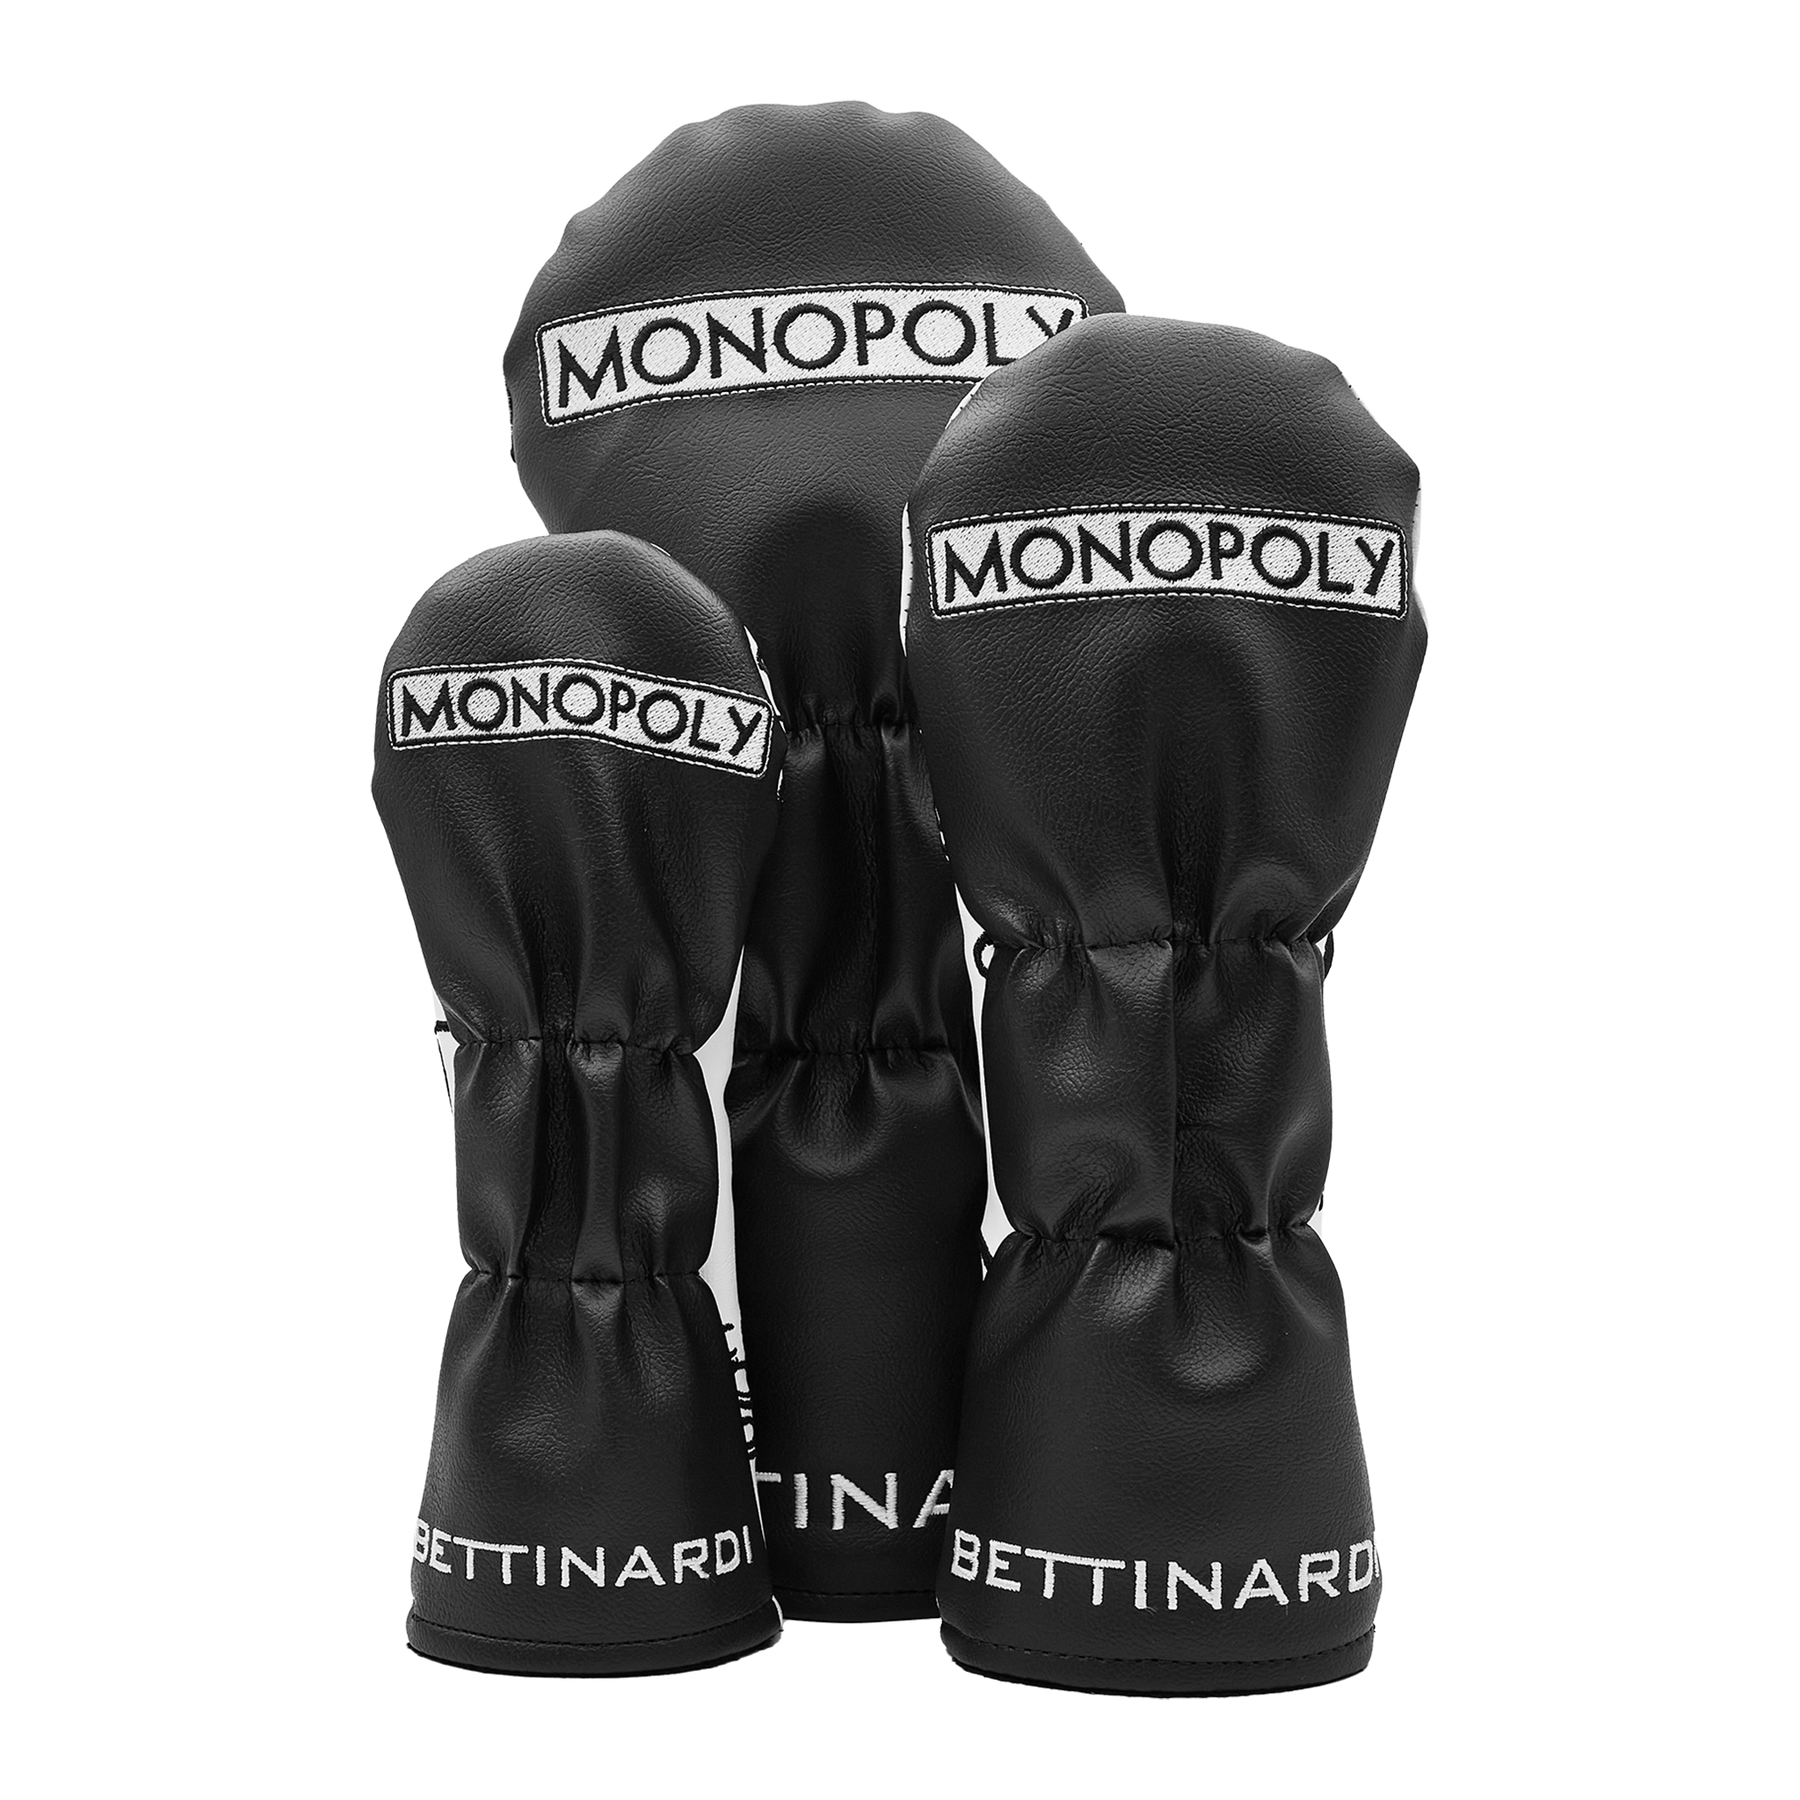 Bettinardi x Monopoly Alignment Stick Cover